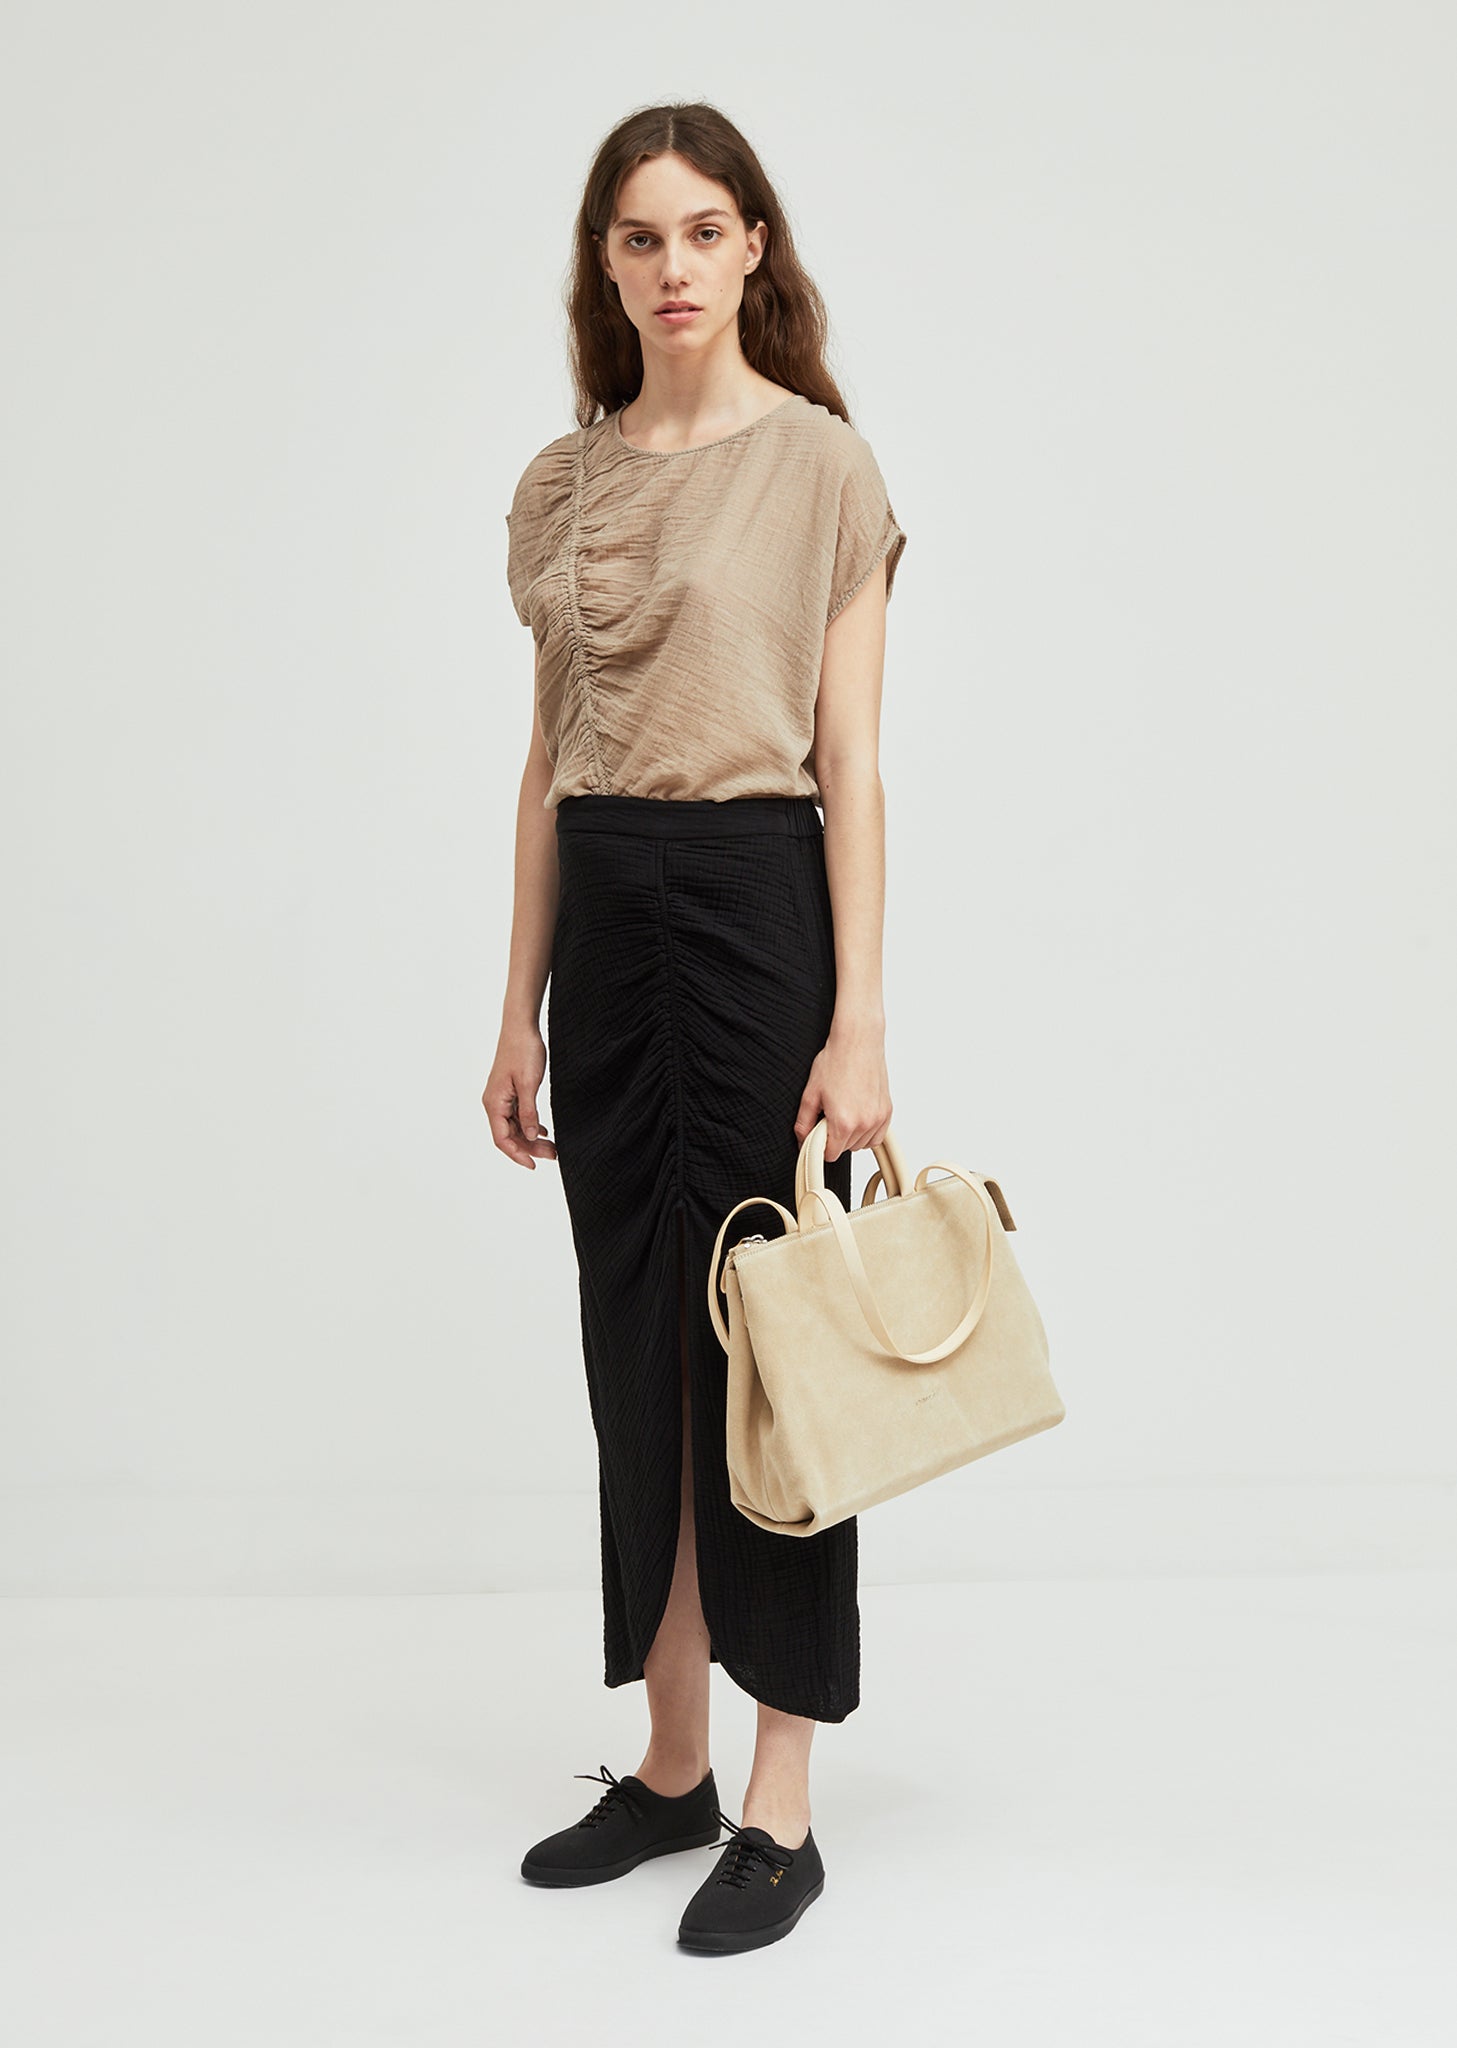 Shoulder & Sling Bags in the color brown for Men on sale | FASHIOLA.in